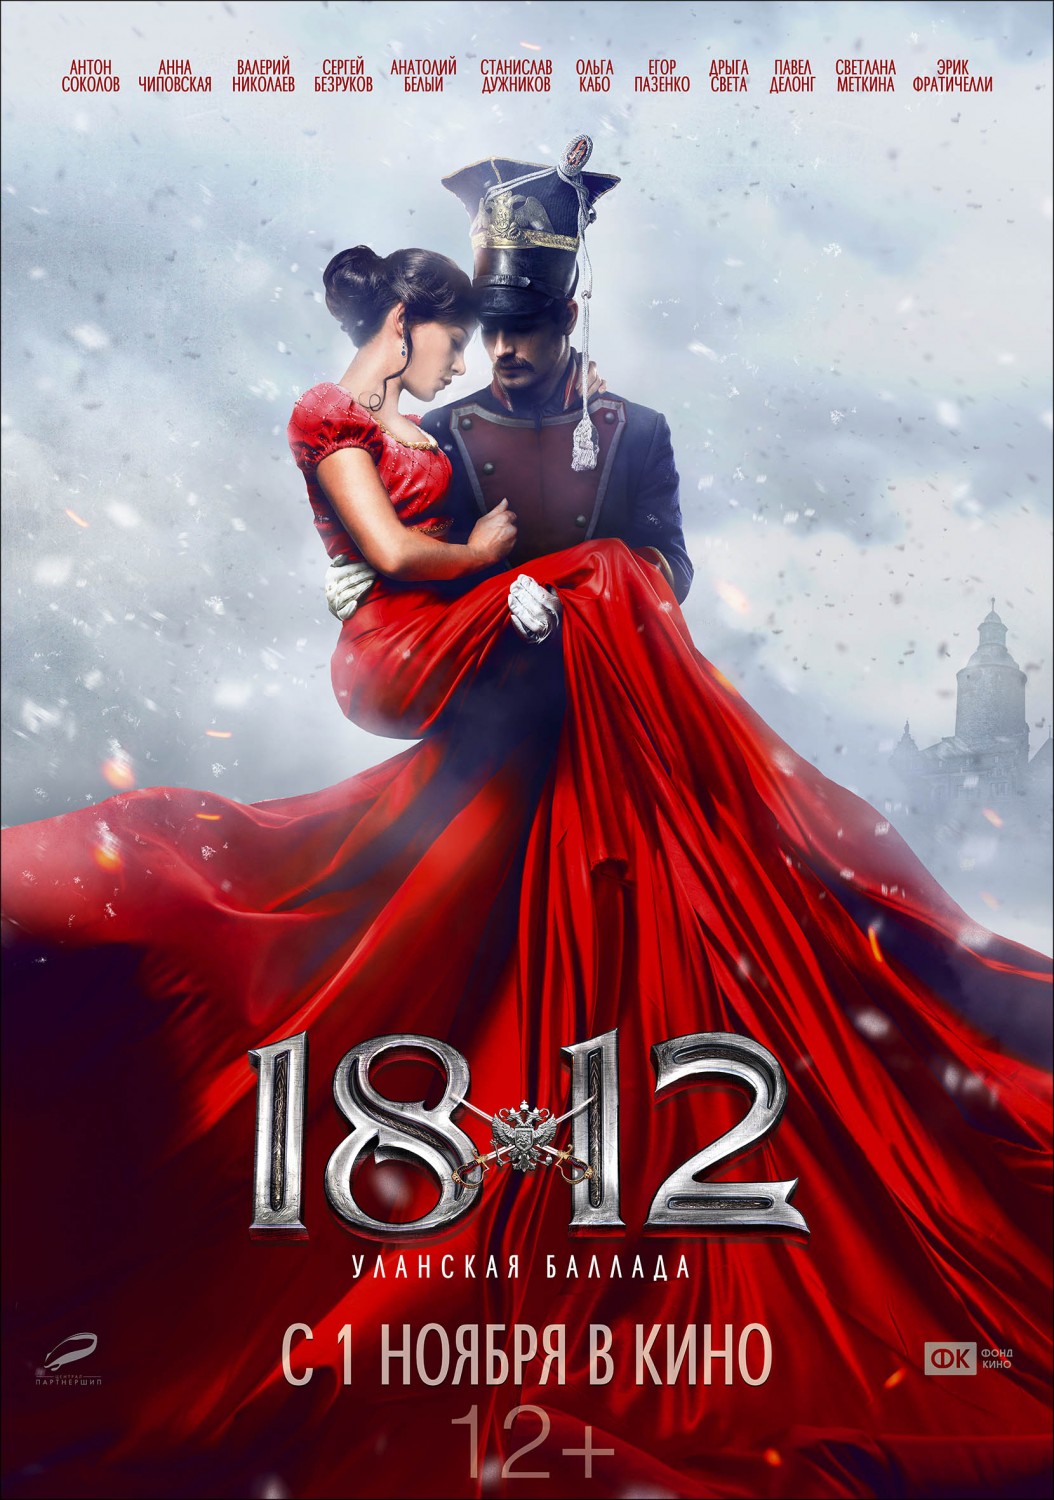 Extra Large Movie Poster Image for 1812. Ulanskaya ballada 